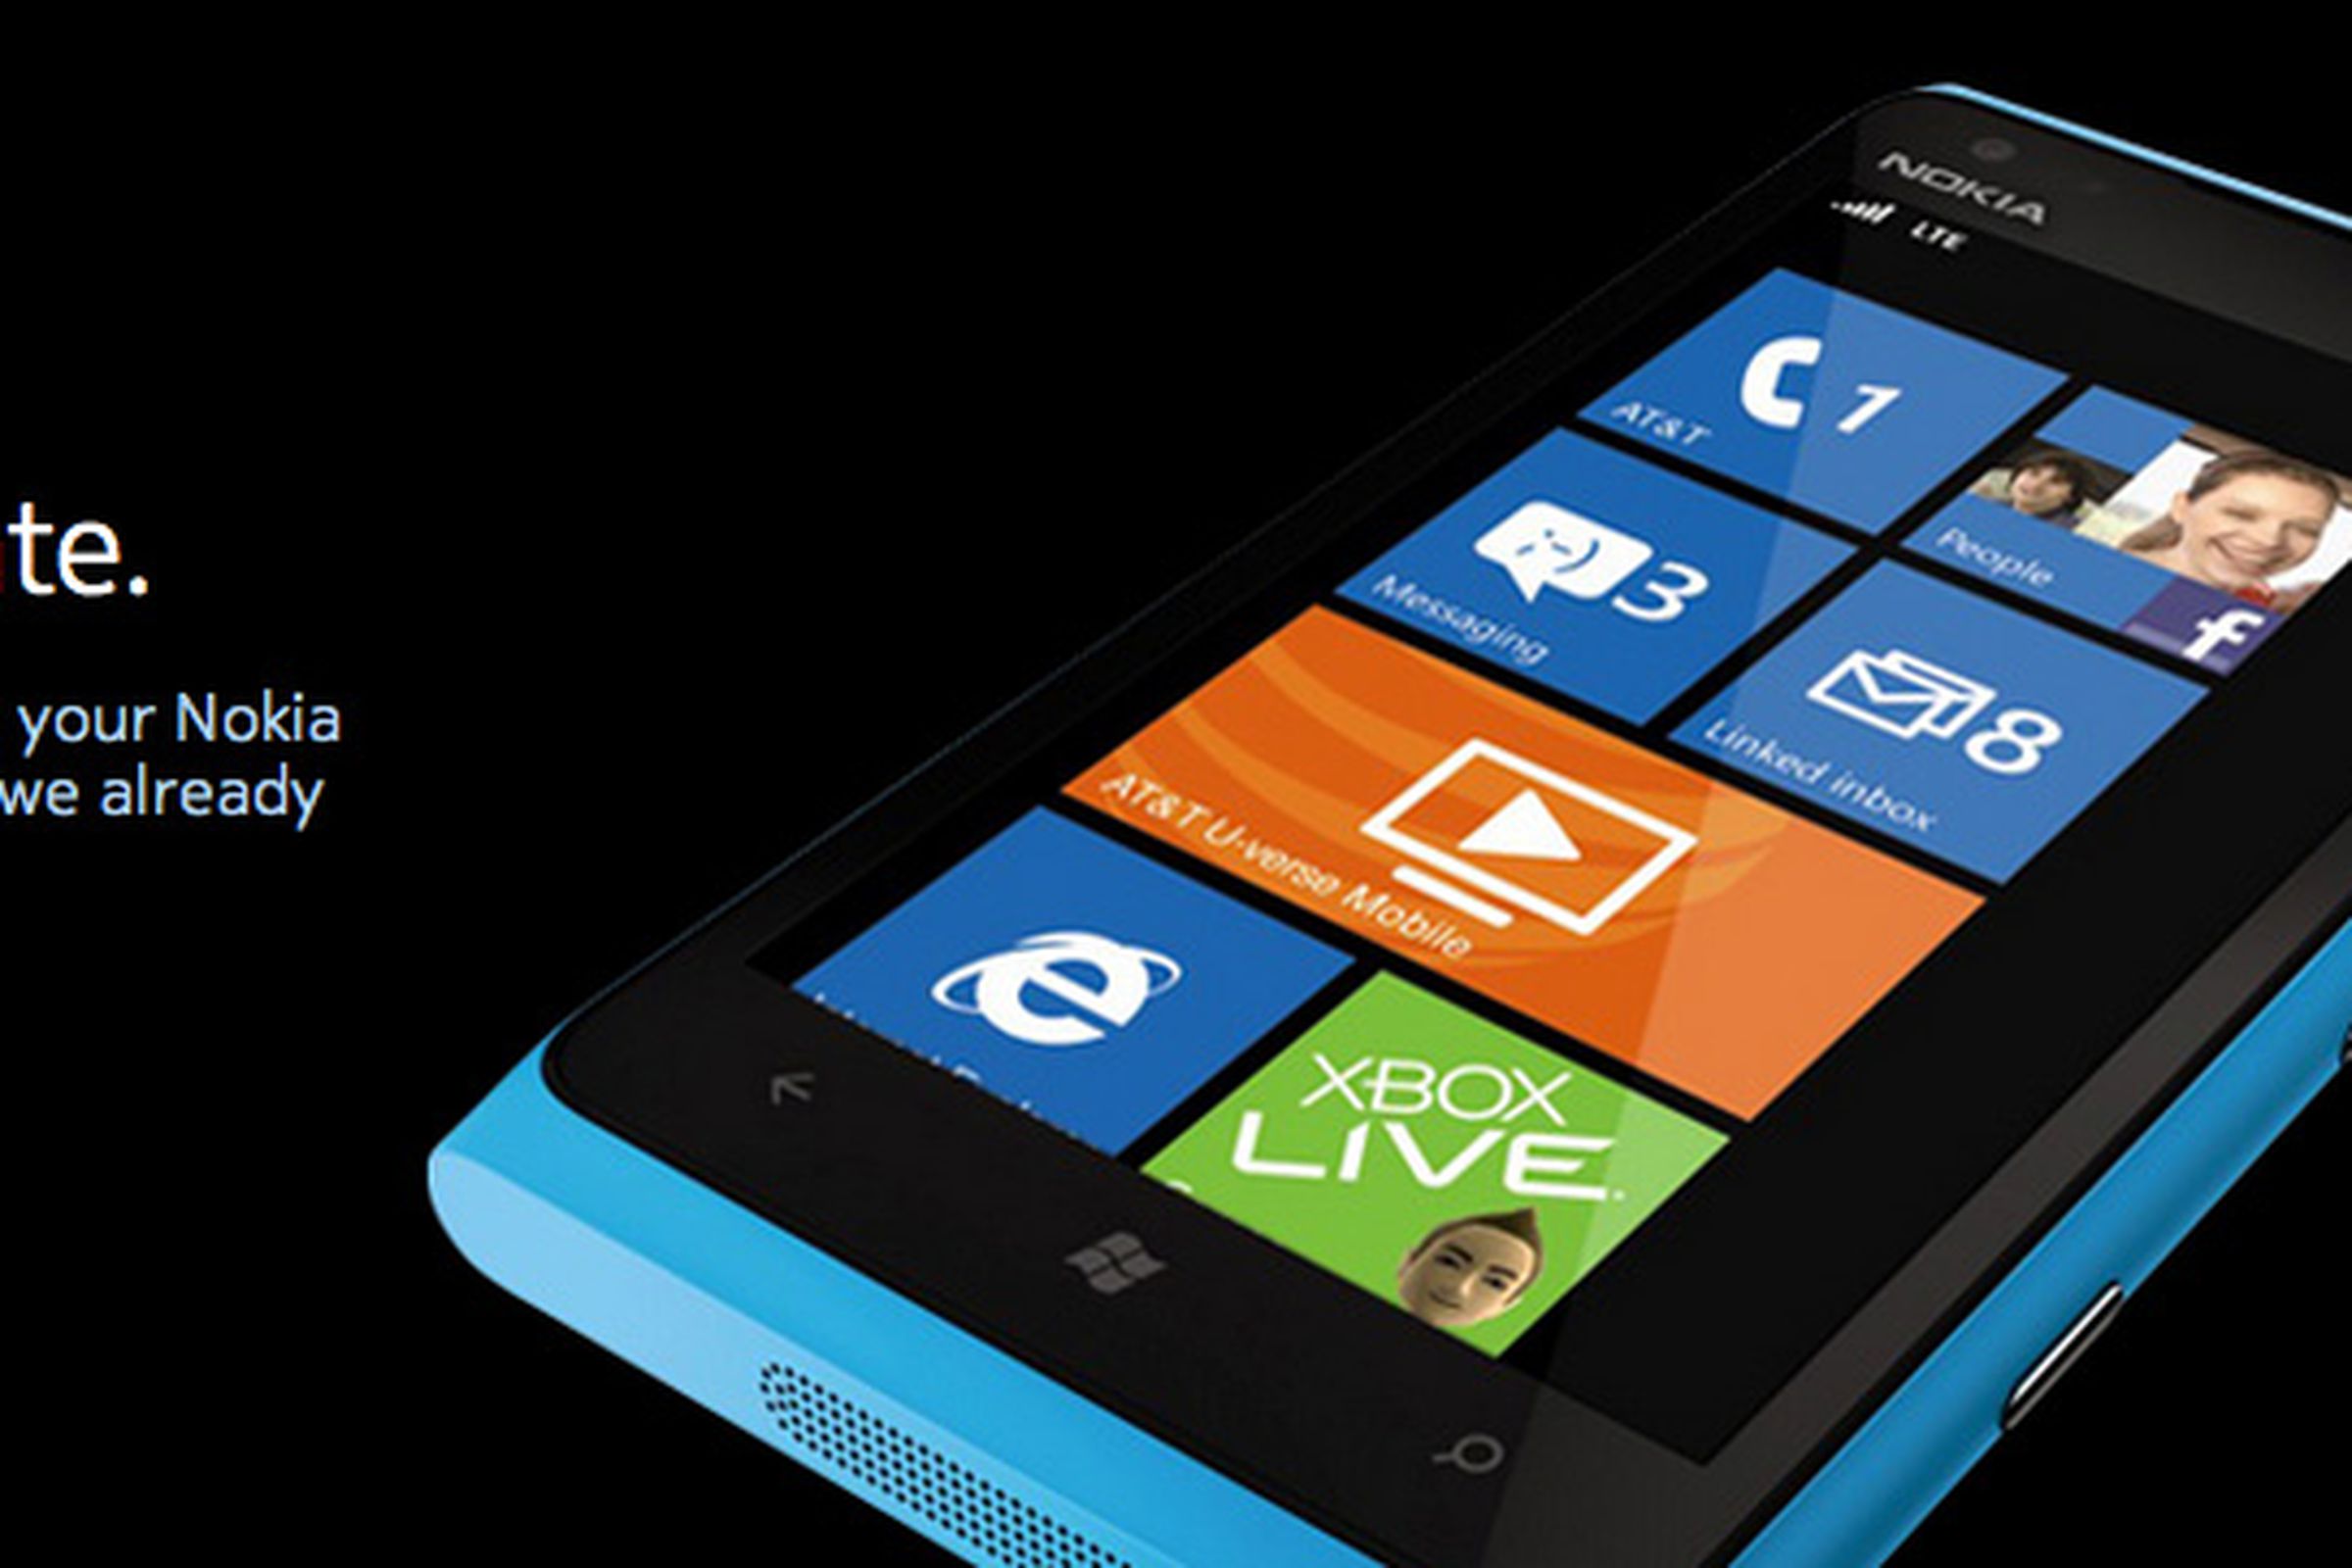 Lumia 900 update